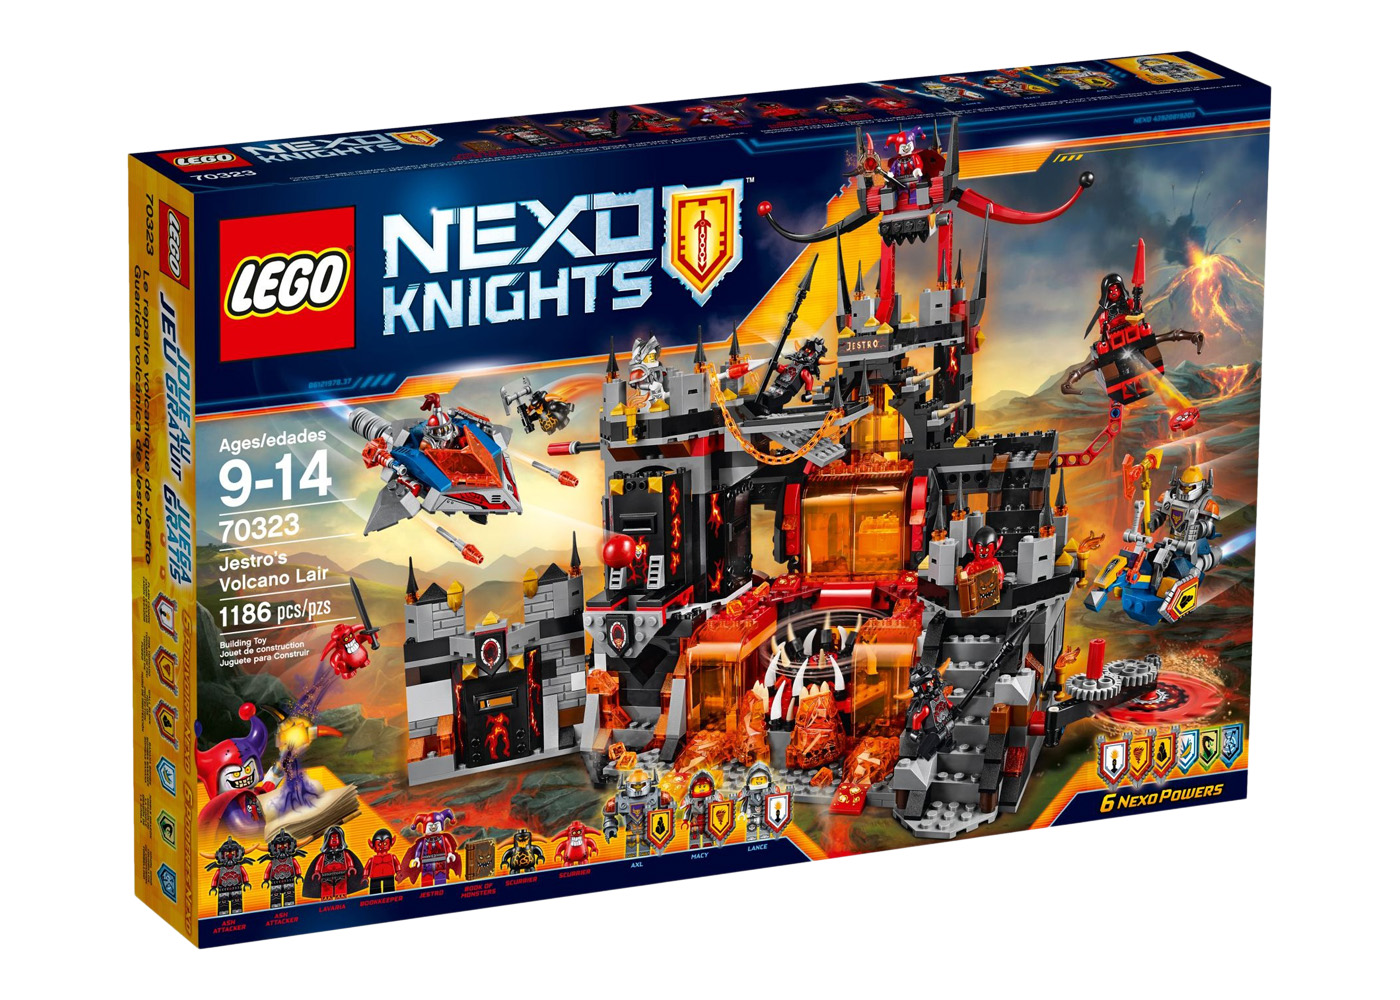 LEGO Nexo Knights Jestro's Volcano Lair Set 70323